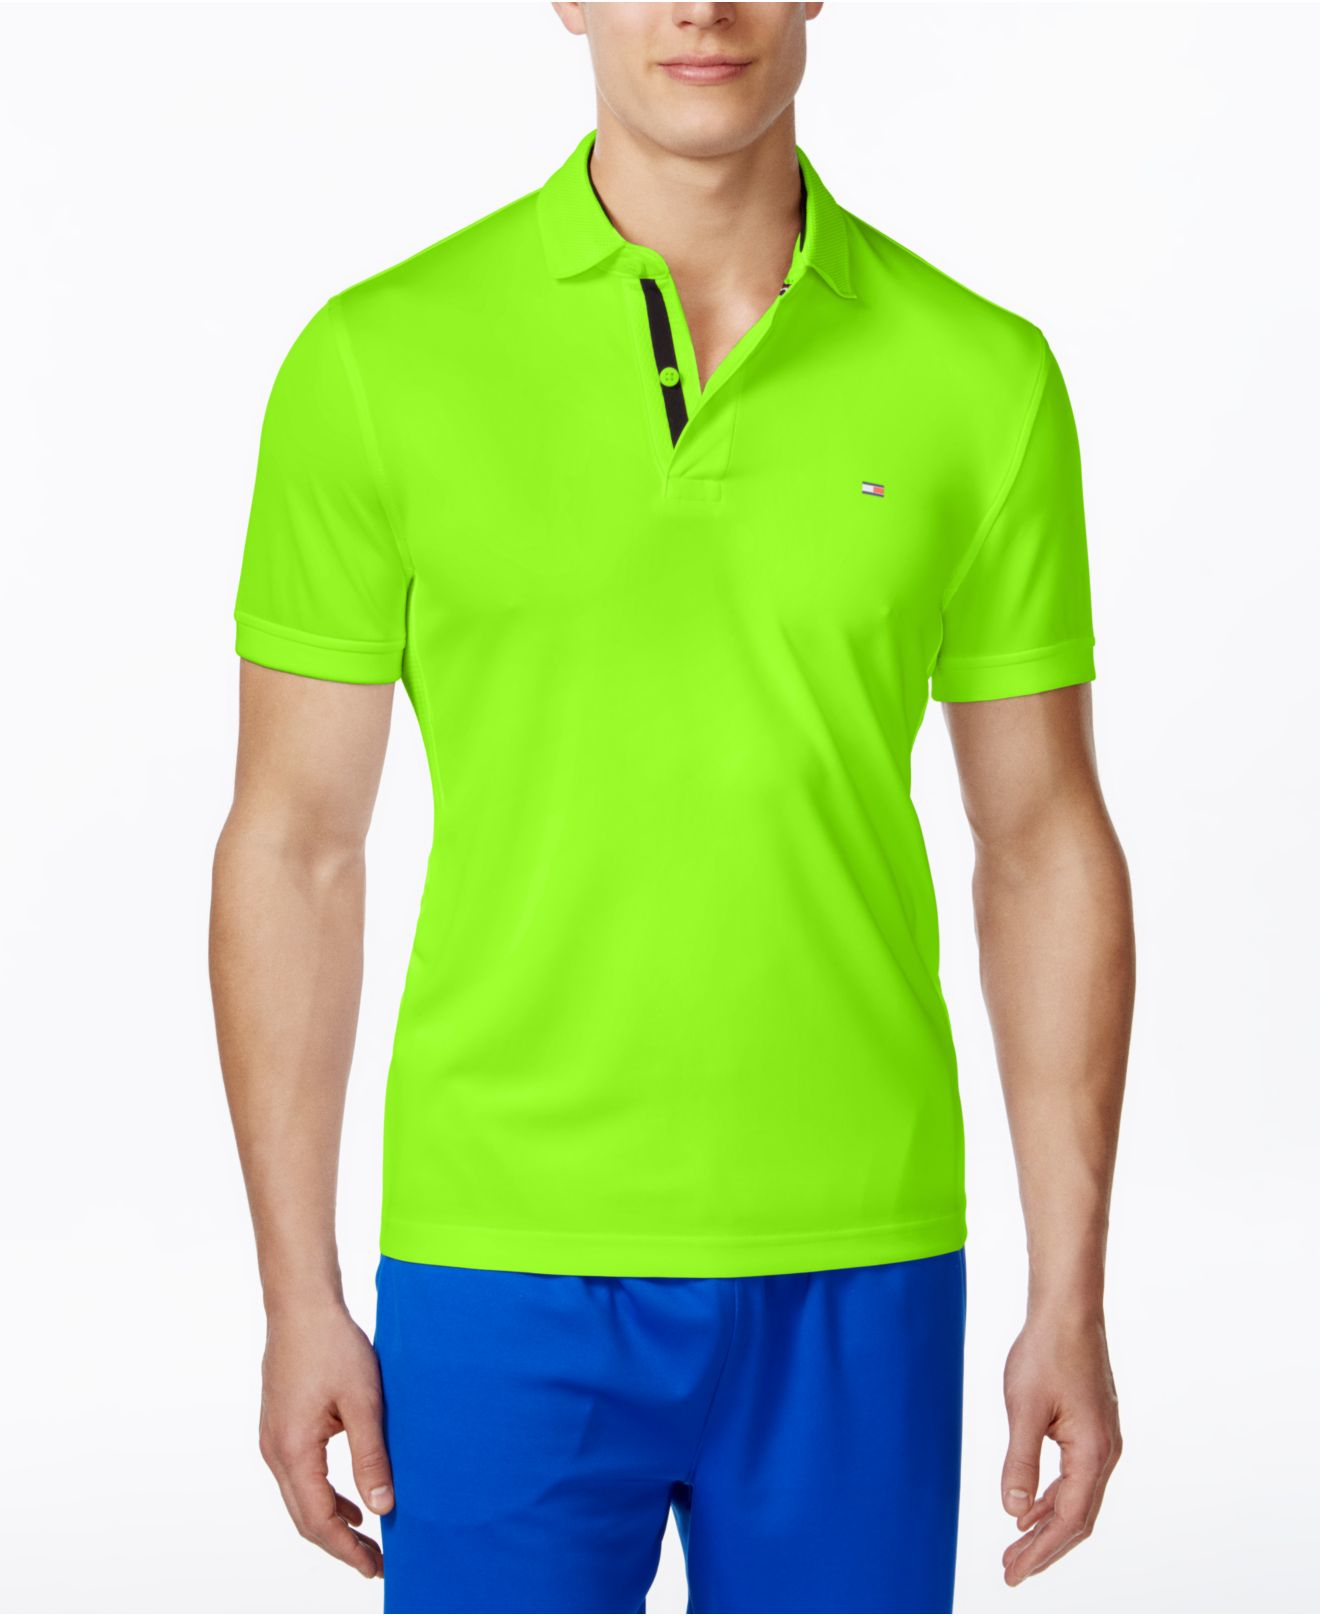 mens lime green polo shirt